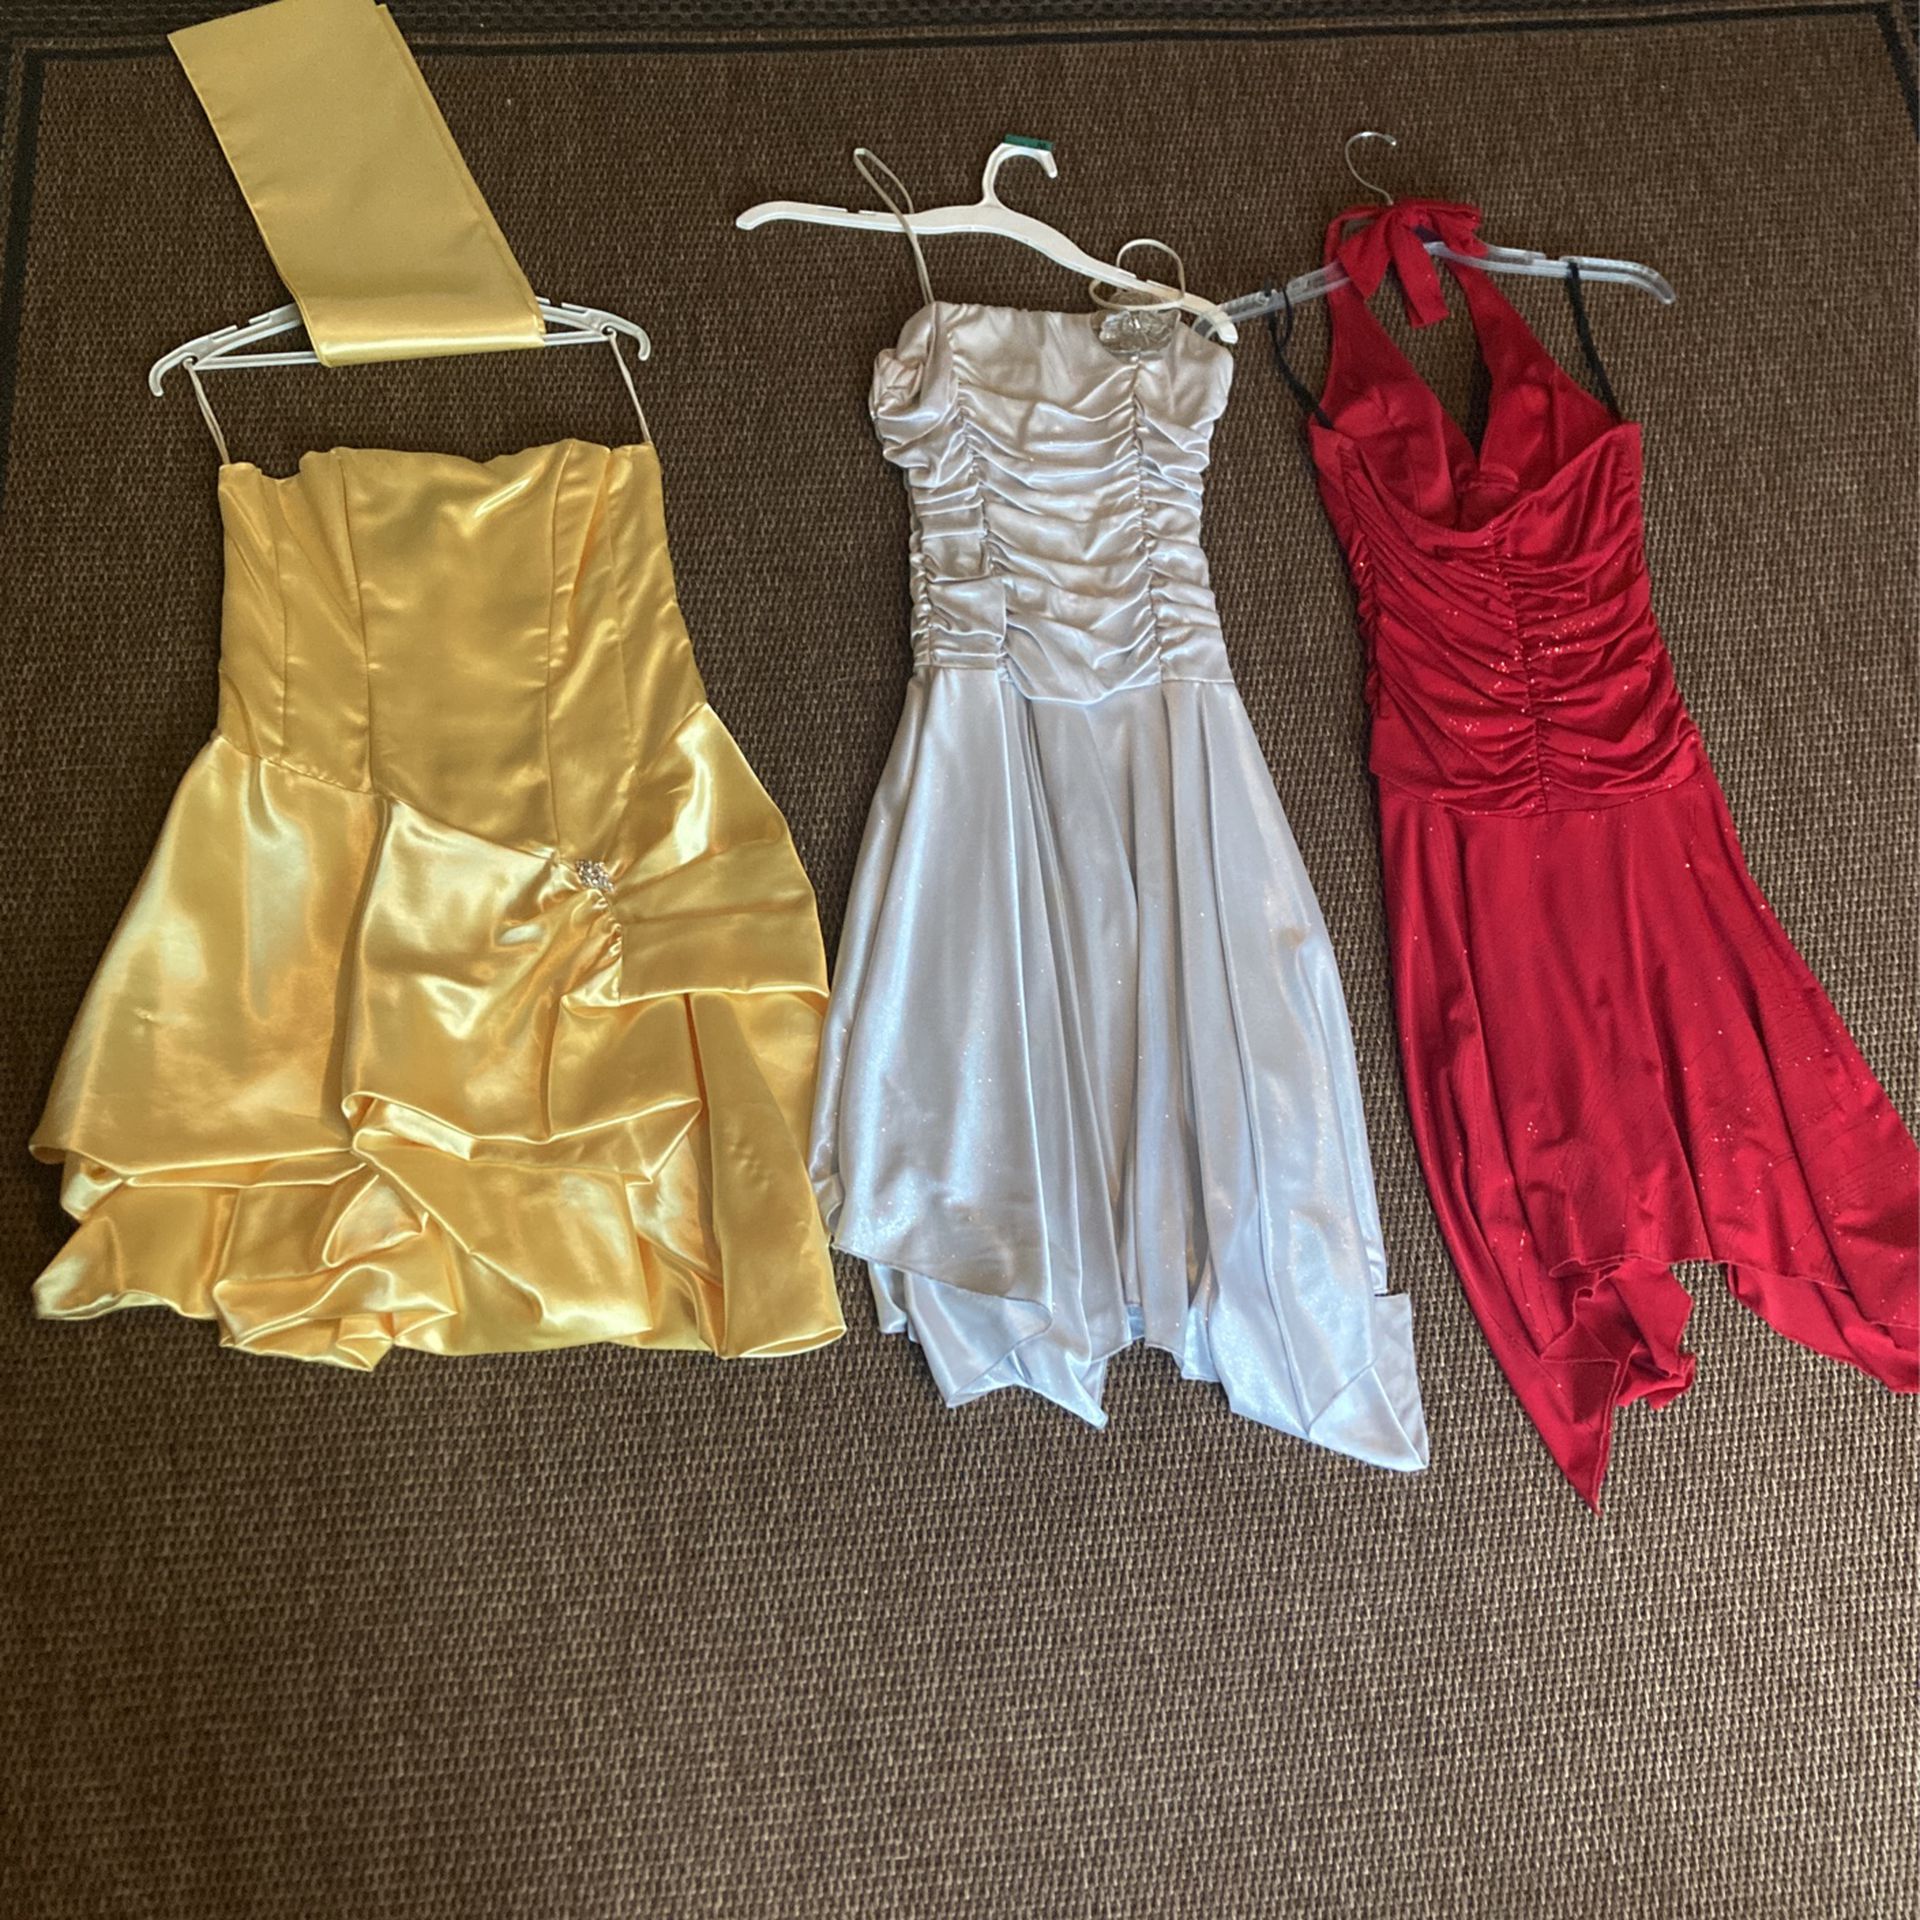 Old Prom Dresses